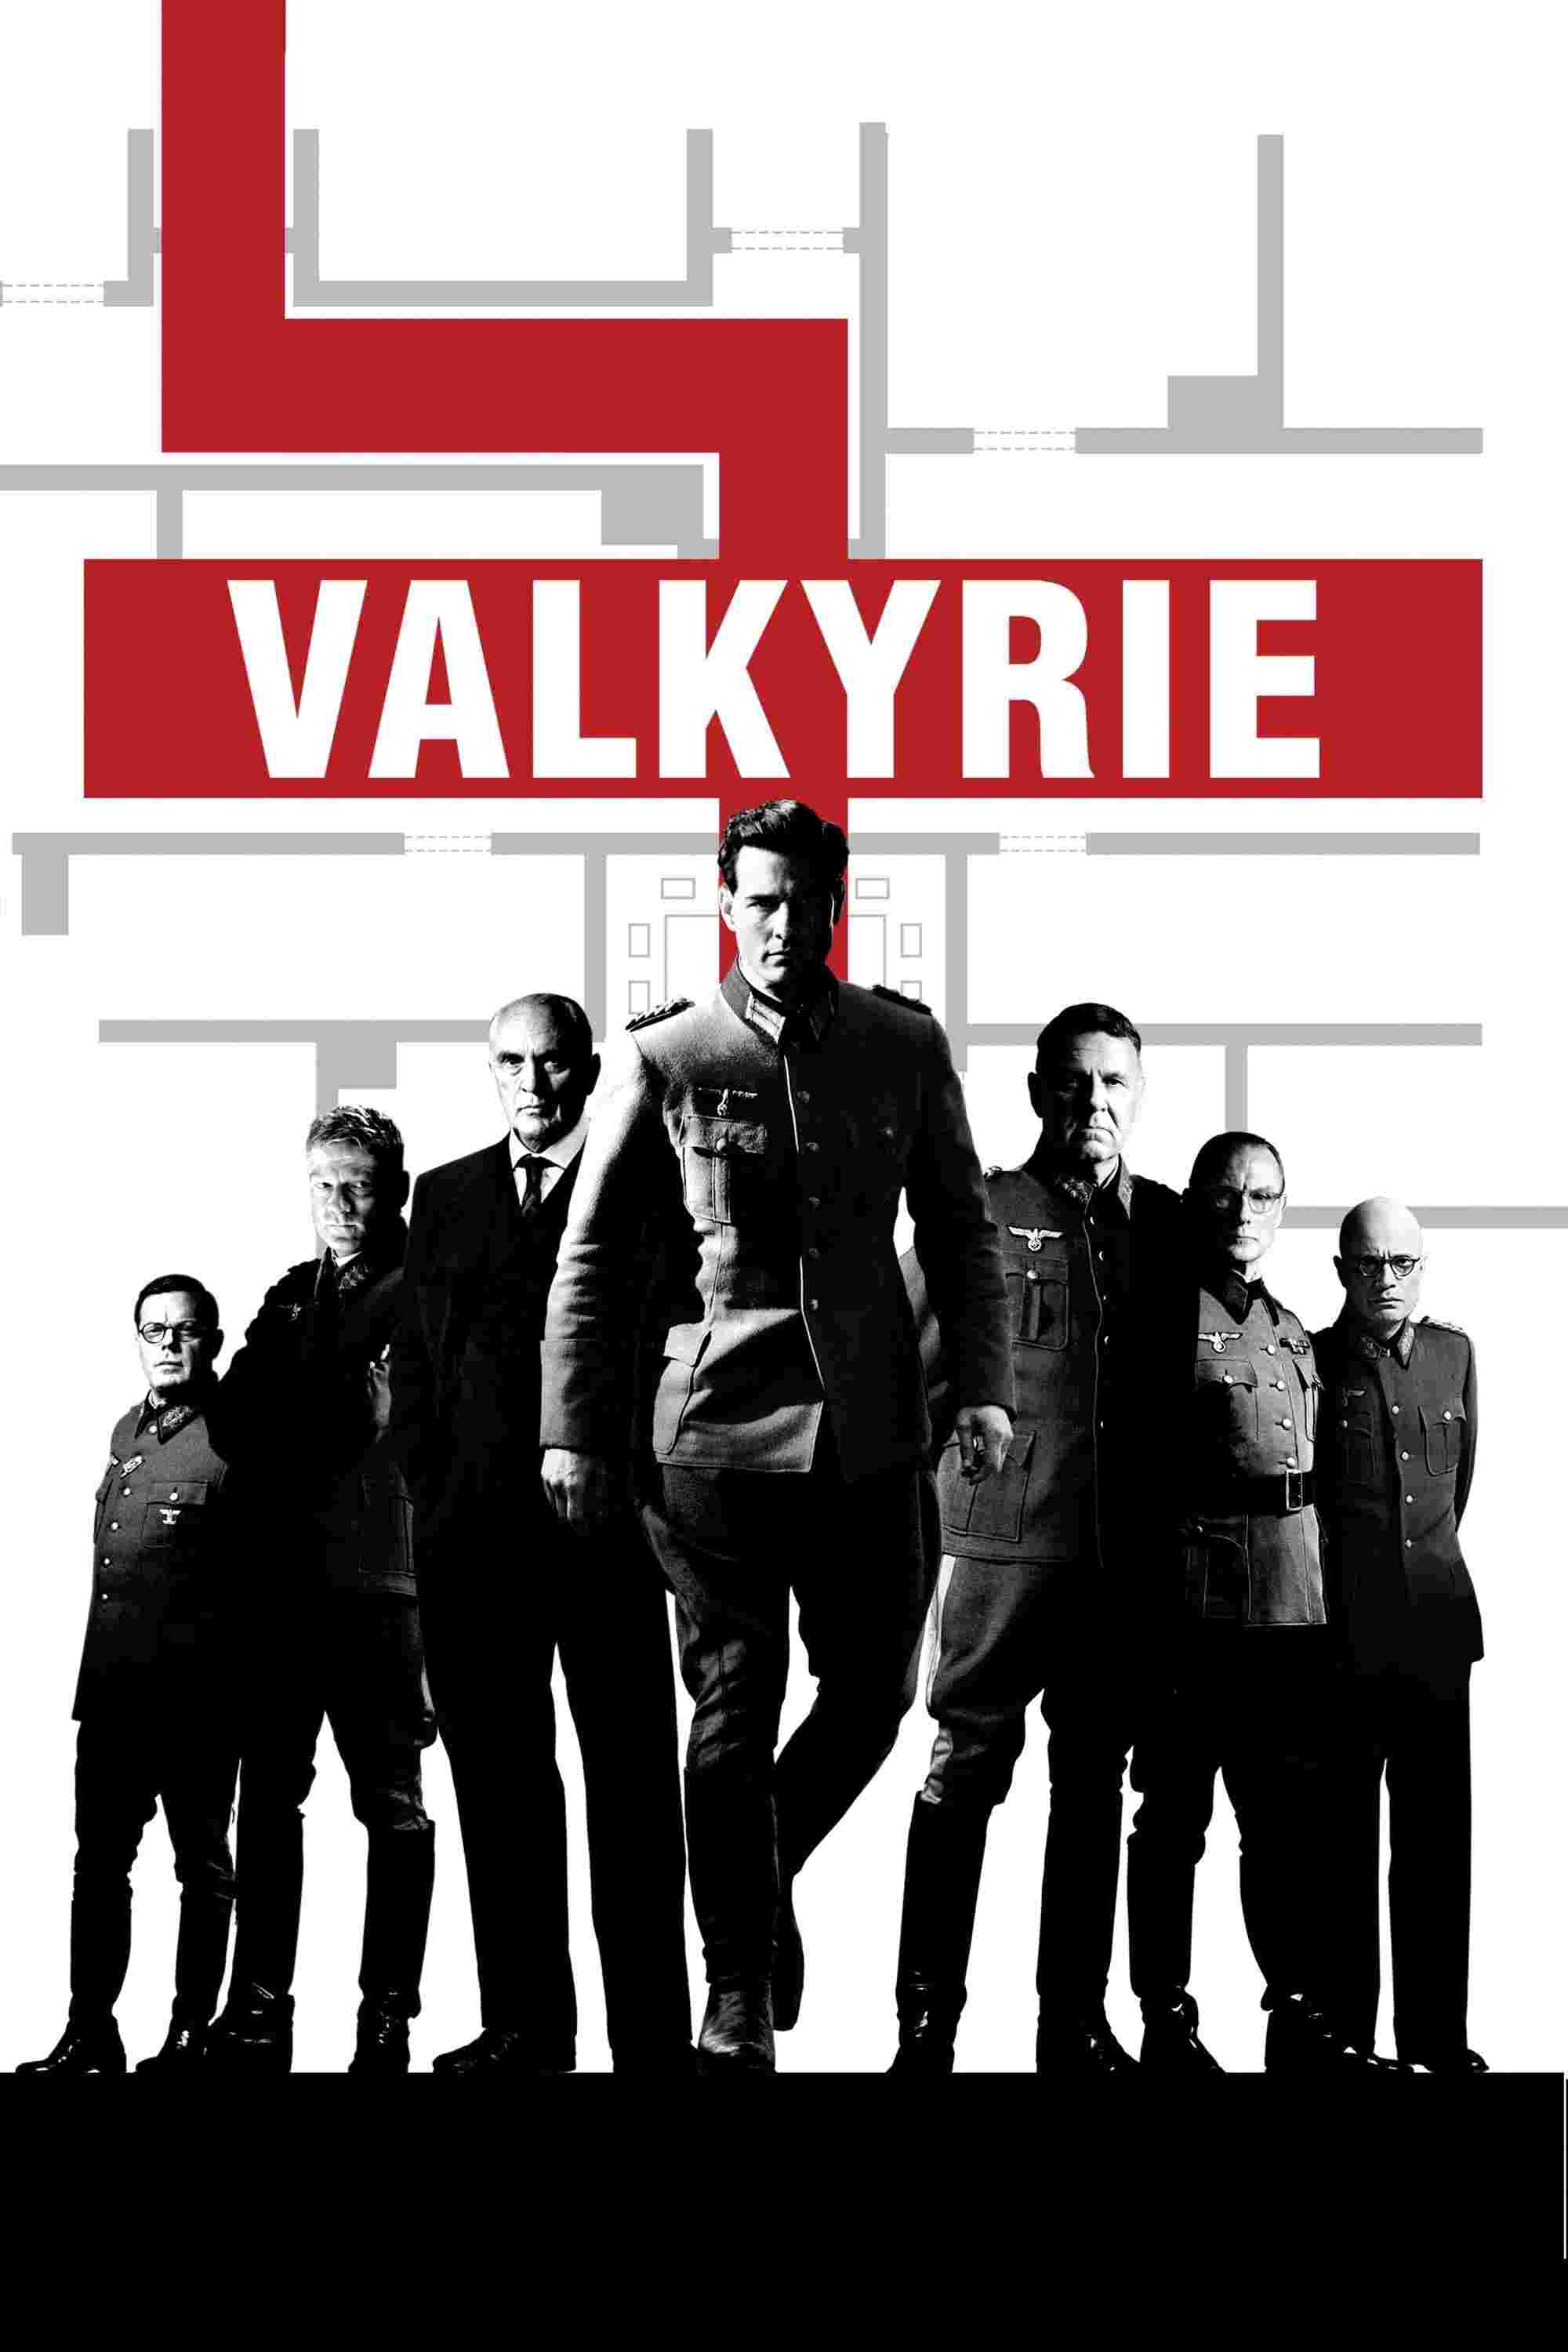 Valkyrie (2008) Tom Cruise